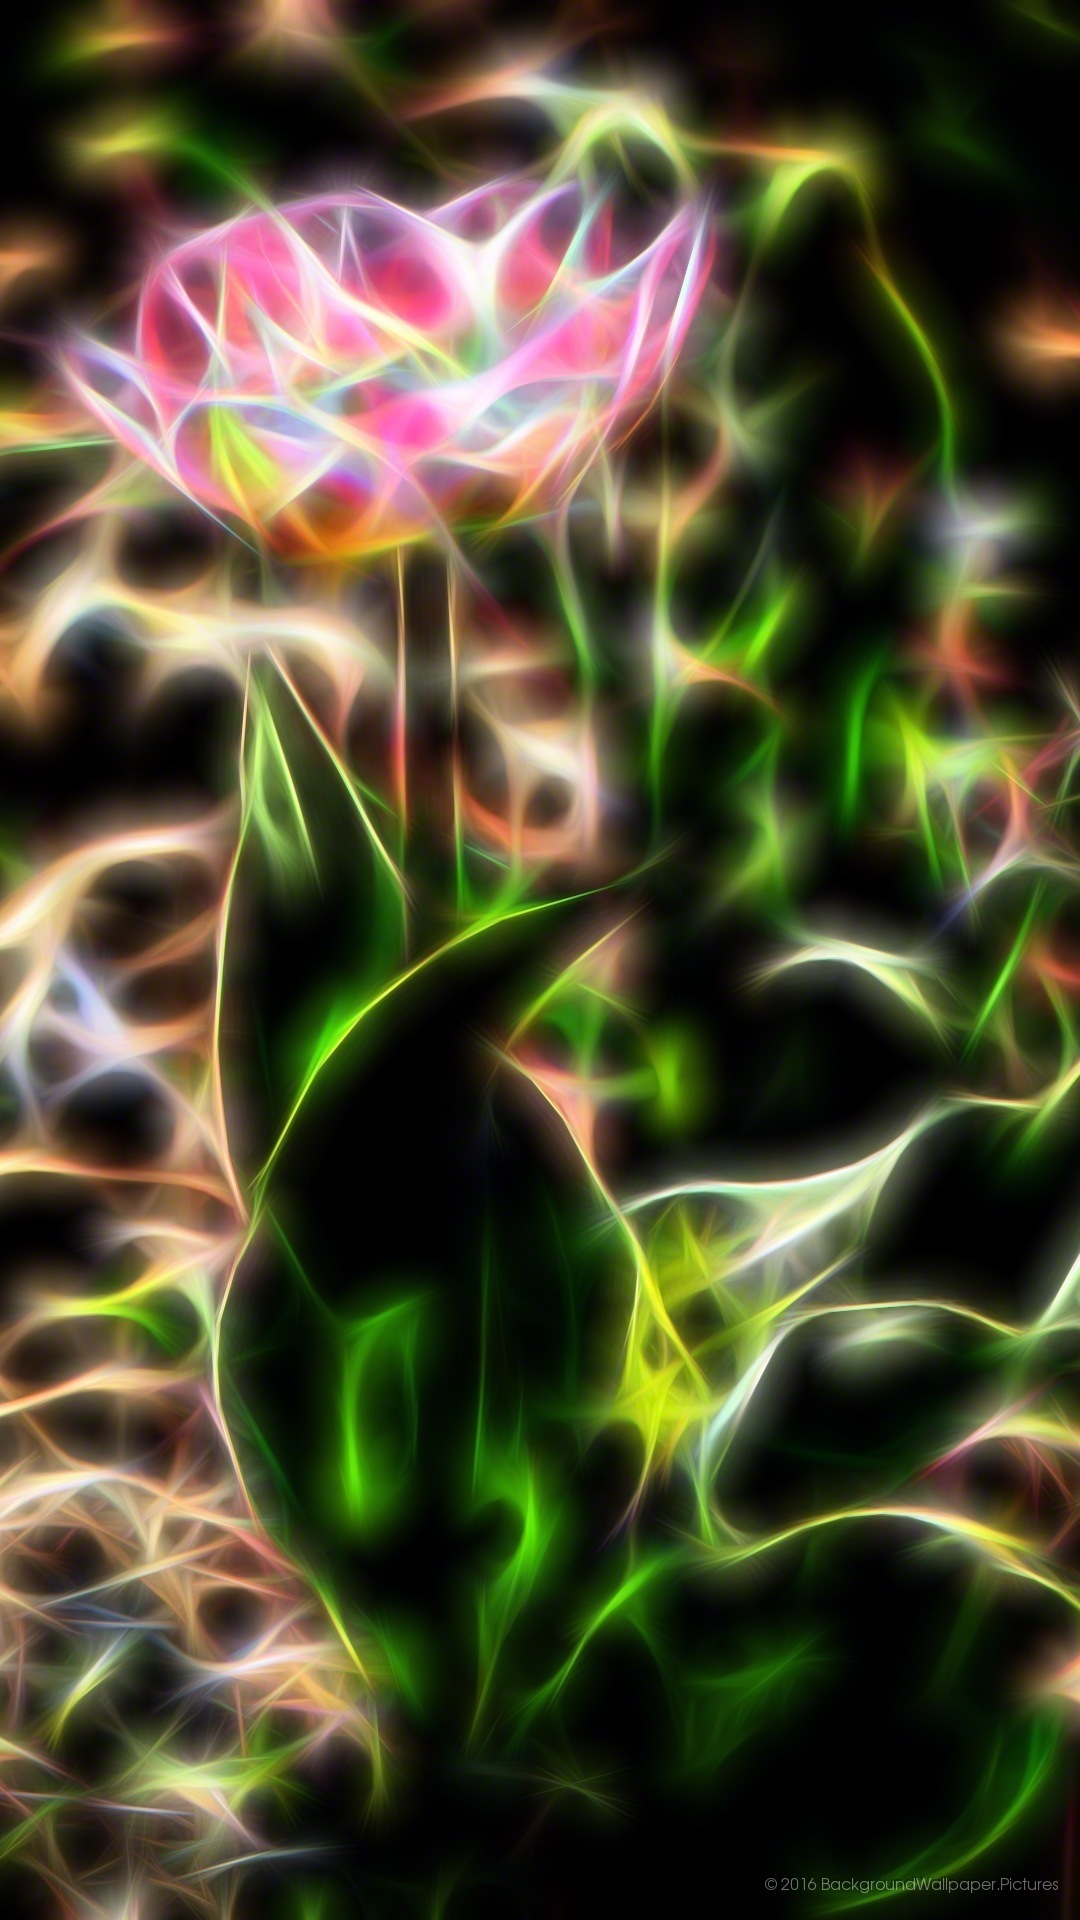 lyf mobile fondos de pantalla hd,verde,arte fractal,púrpura,hoja,planta